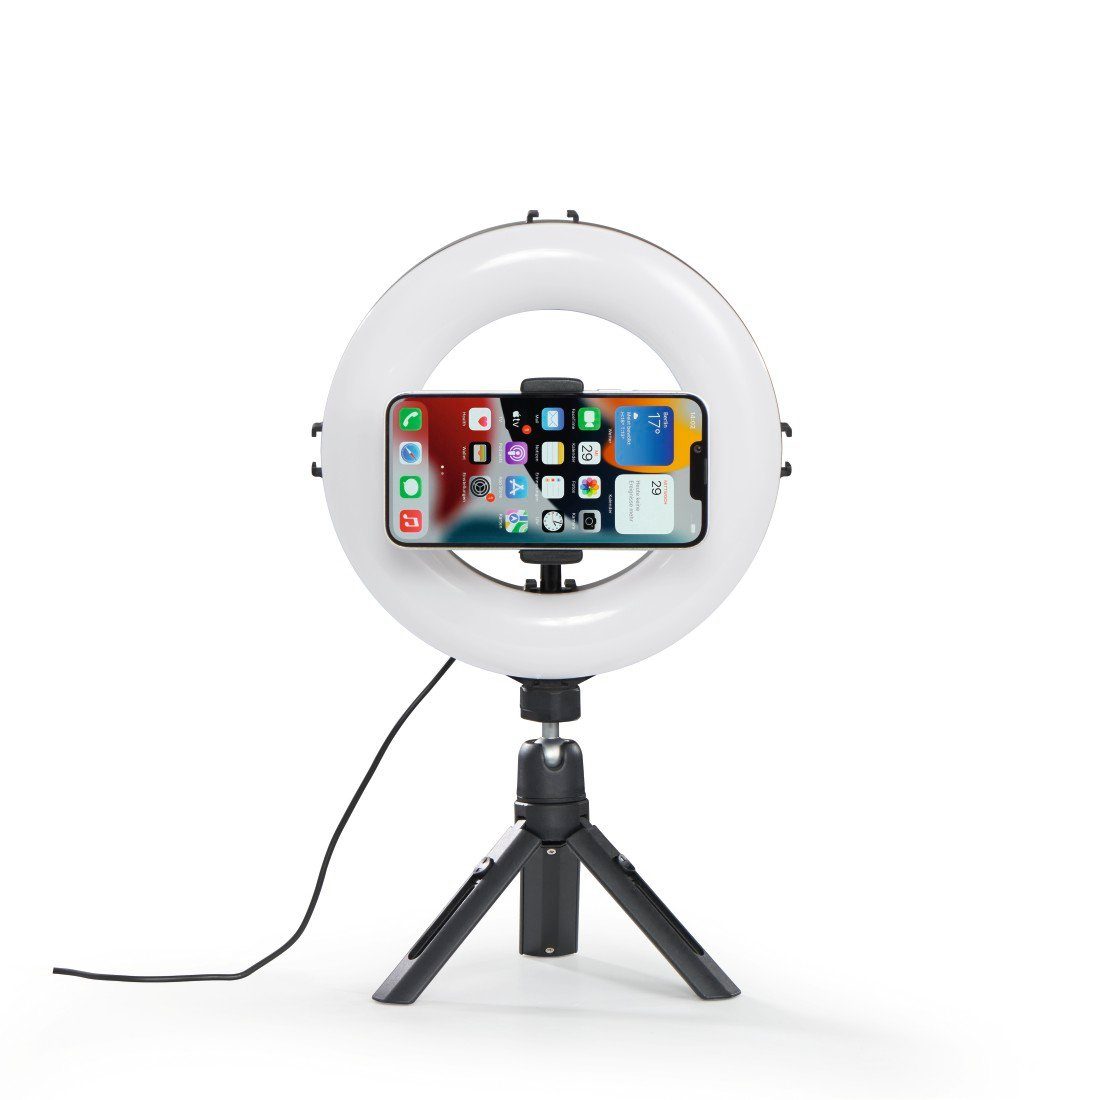 für LED Webcam, Stativ Handy, Hama mit Ringlicht Mikrofon, Ringleuchte Videokonferenz